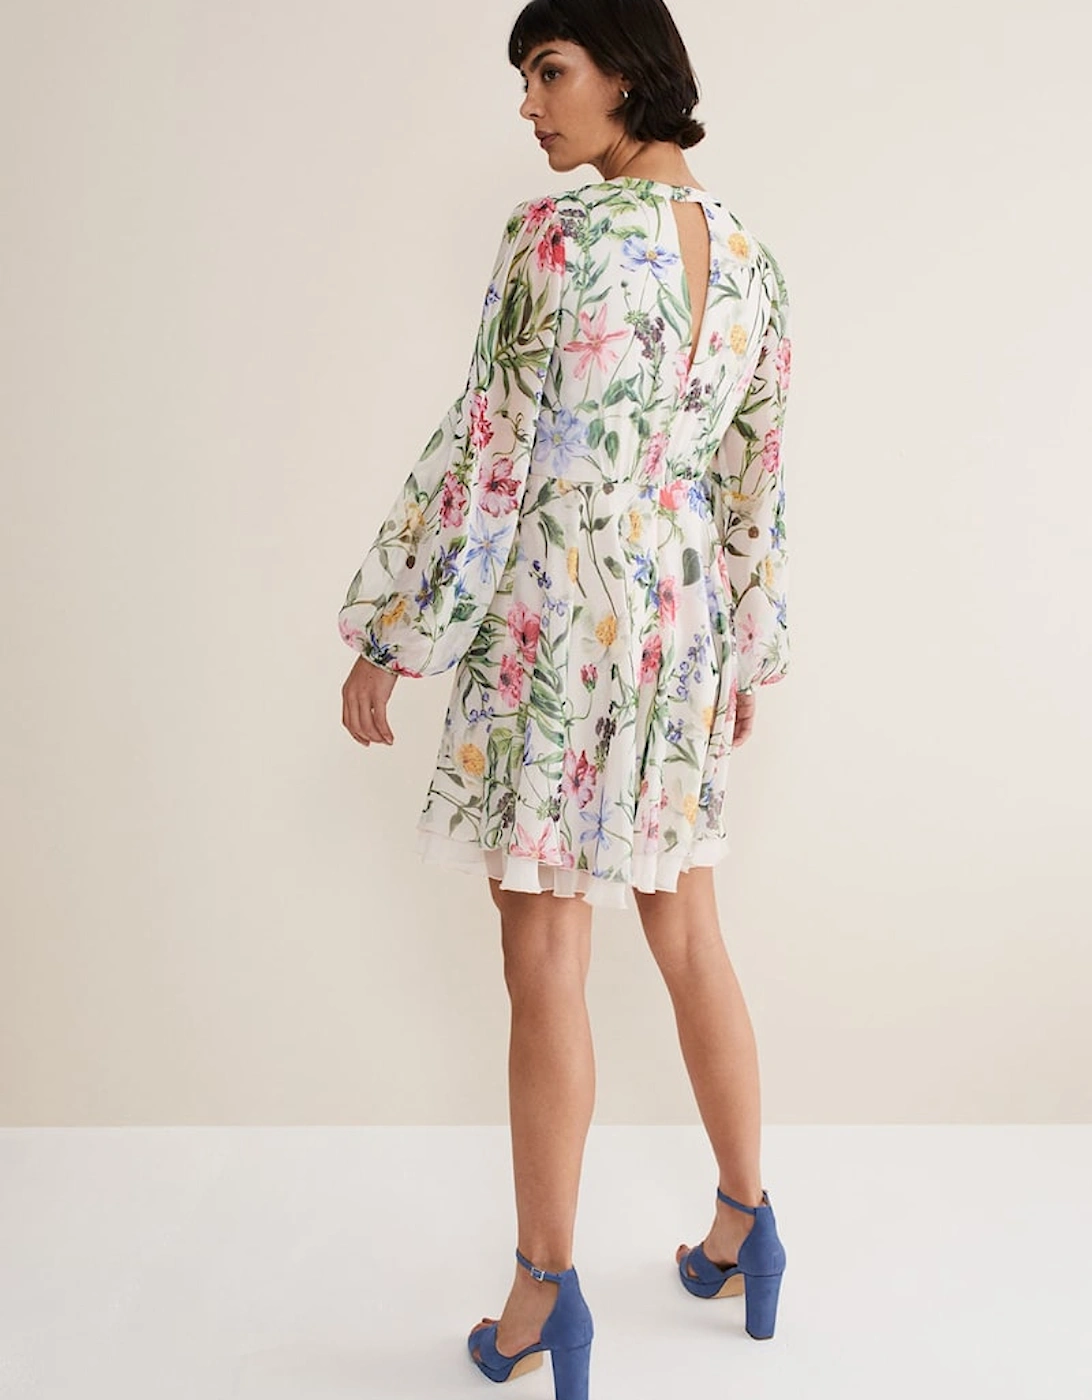 Everleigh Chiffon Floral Mini Dress